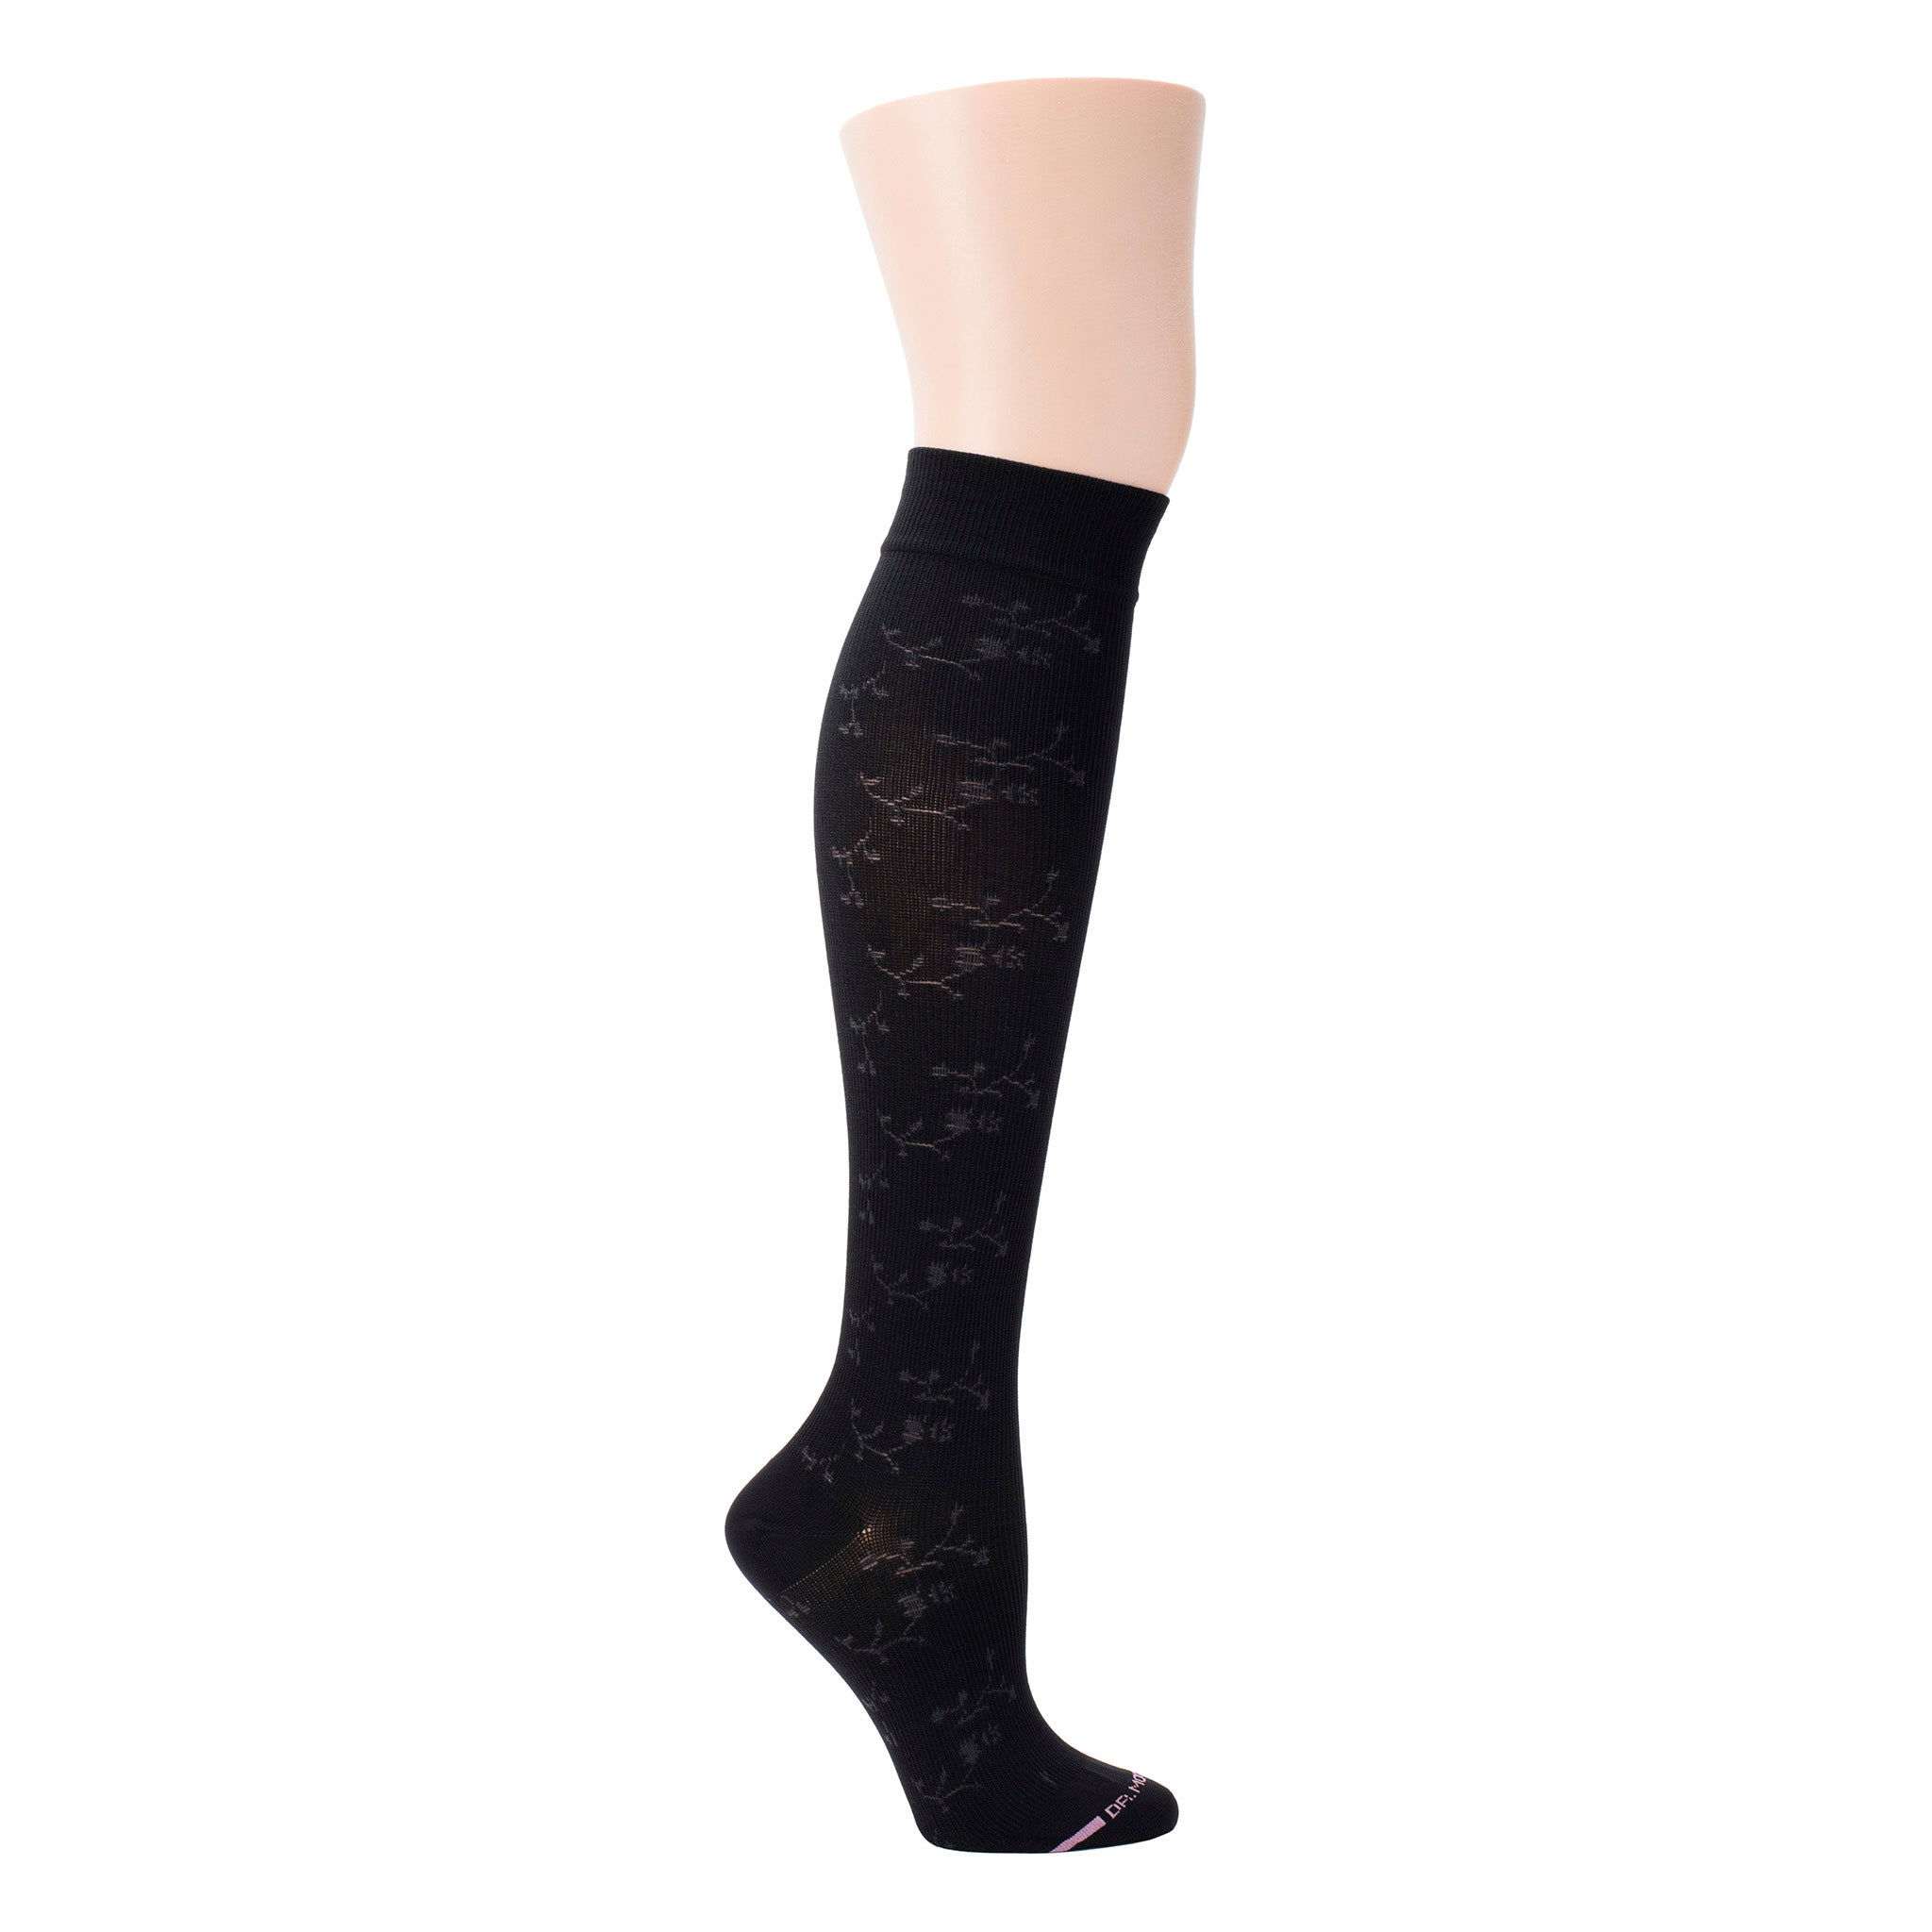 11.4-12.2 Knee High Closed Toe Compression Calf Socks for Women